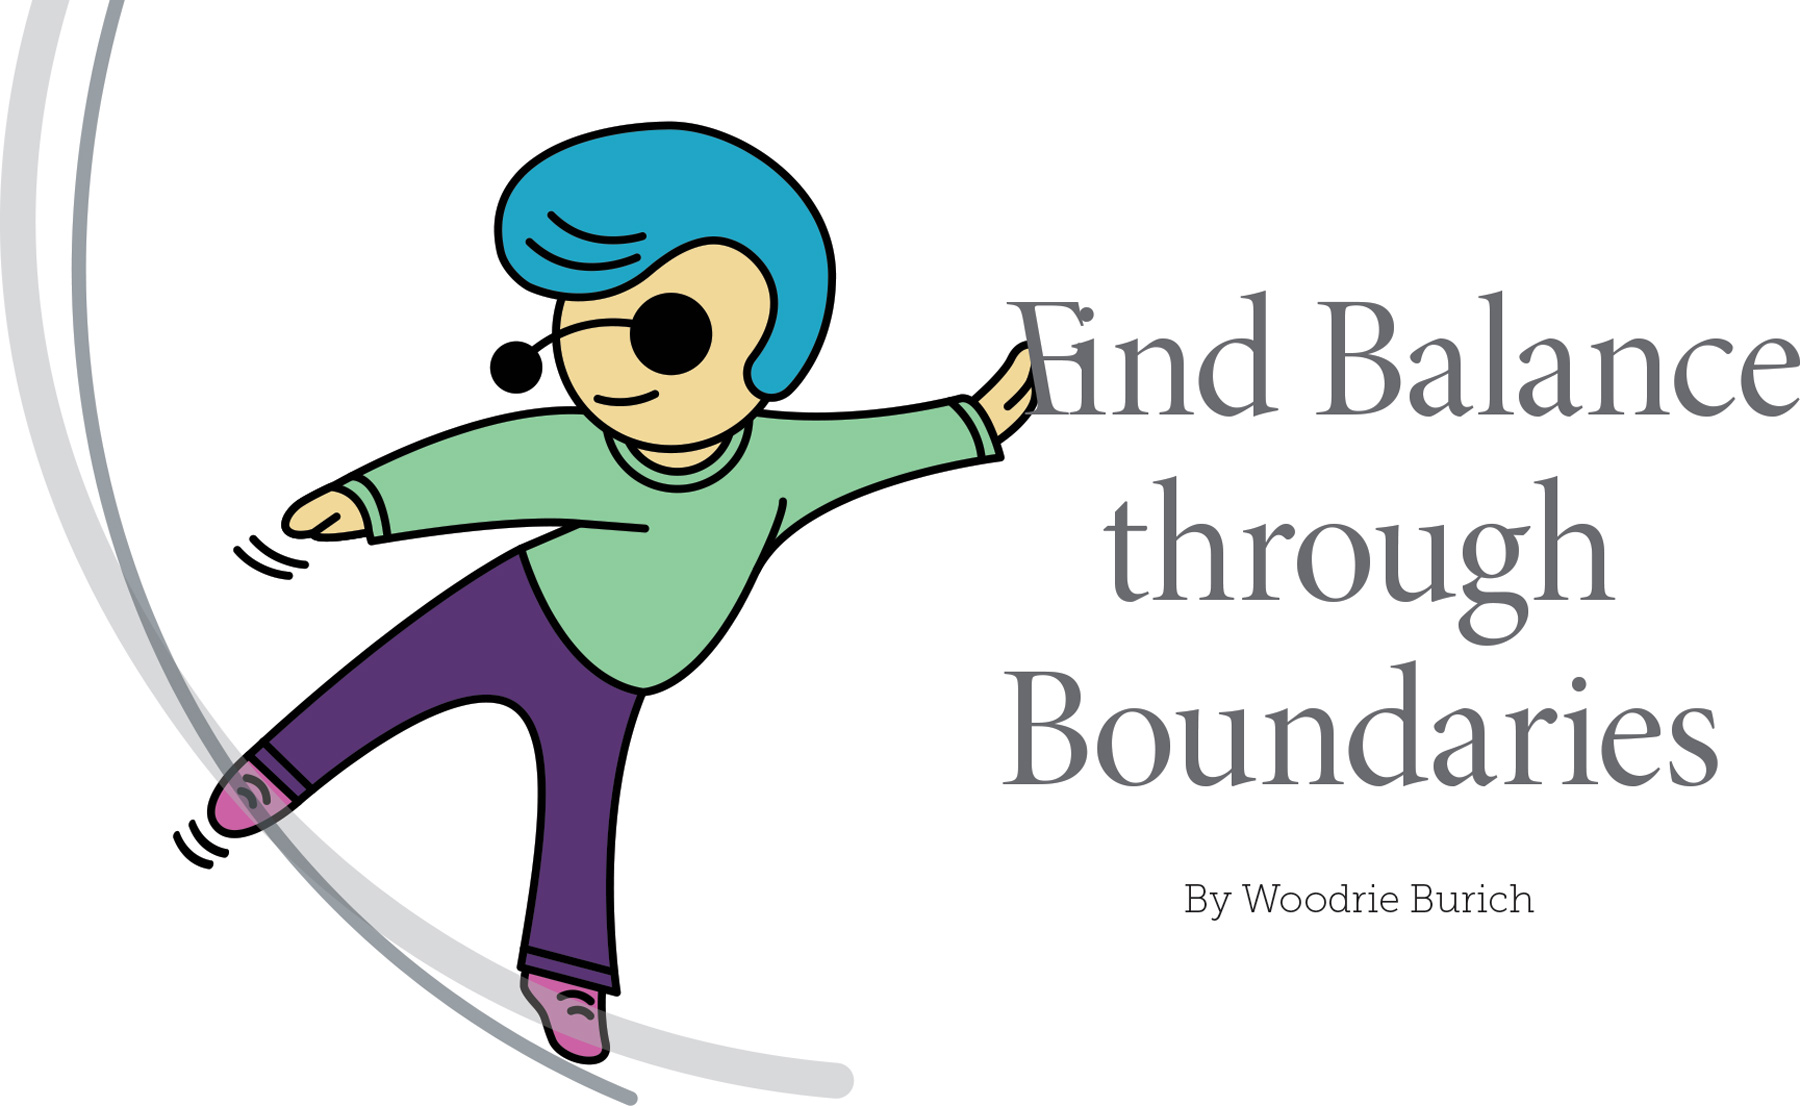 Find Balance through Boundaries title